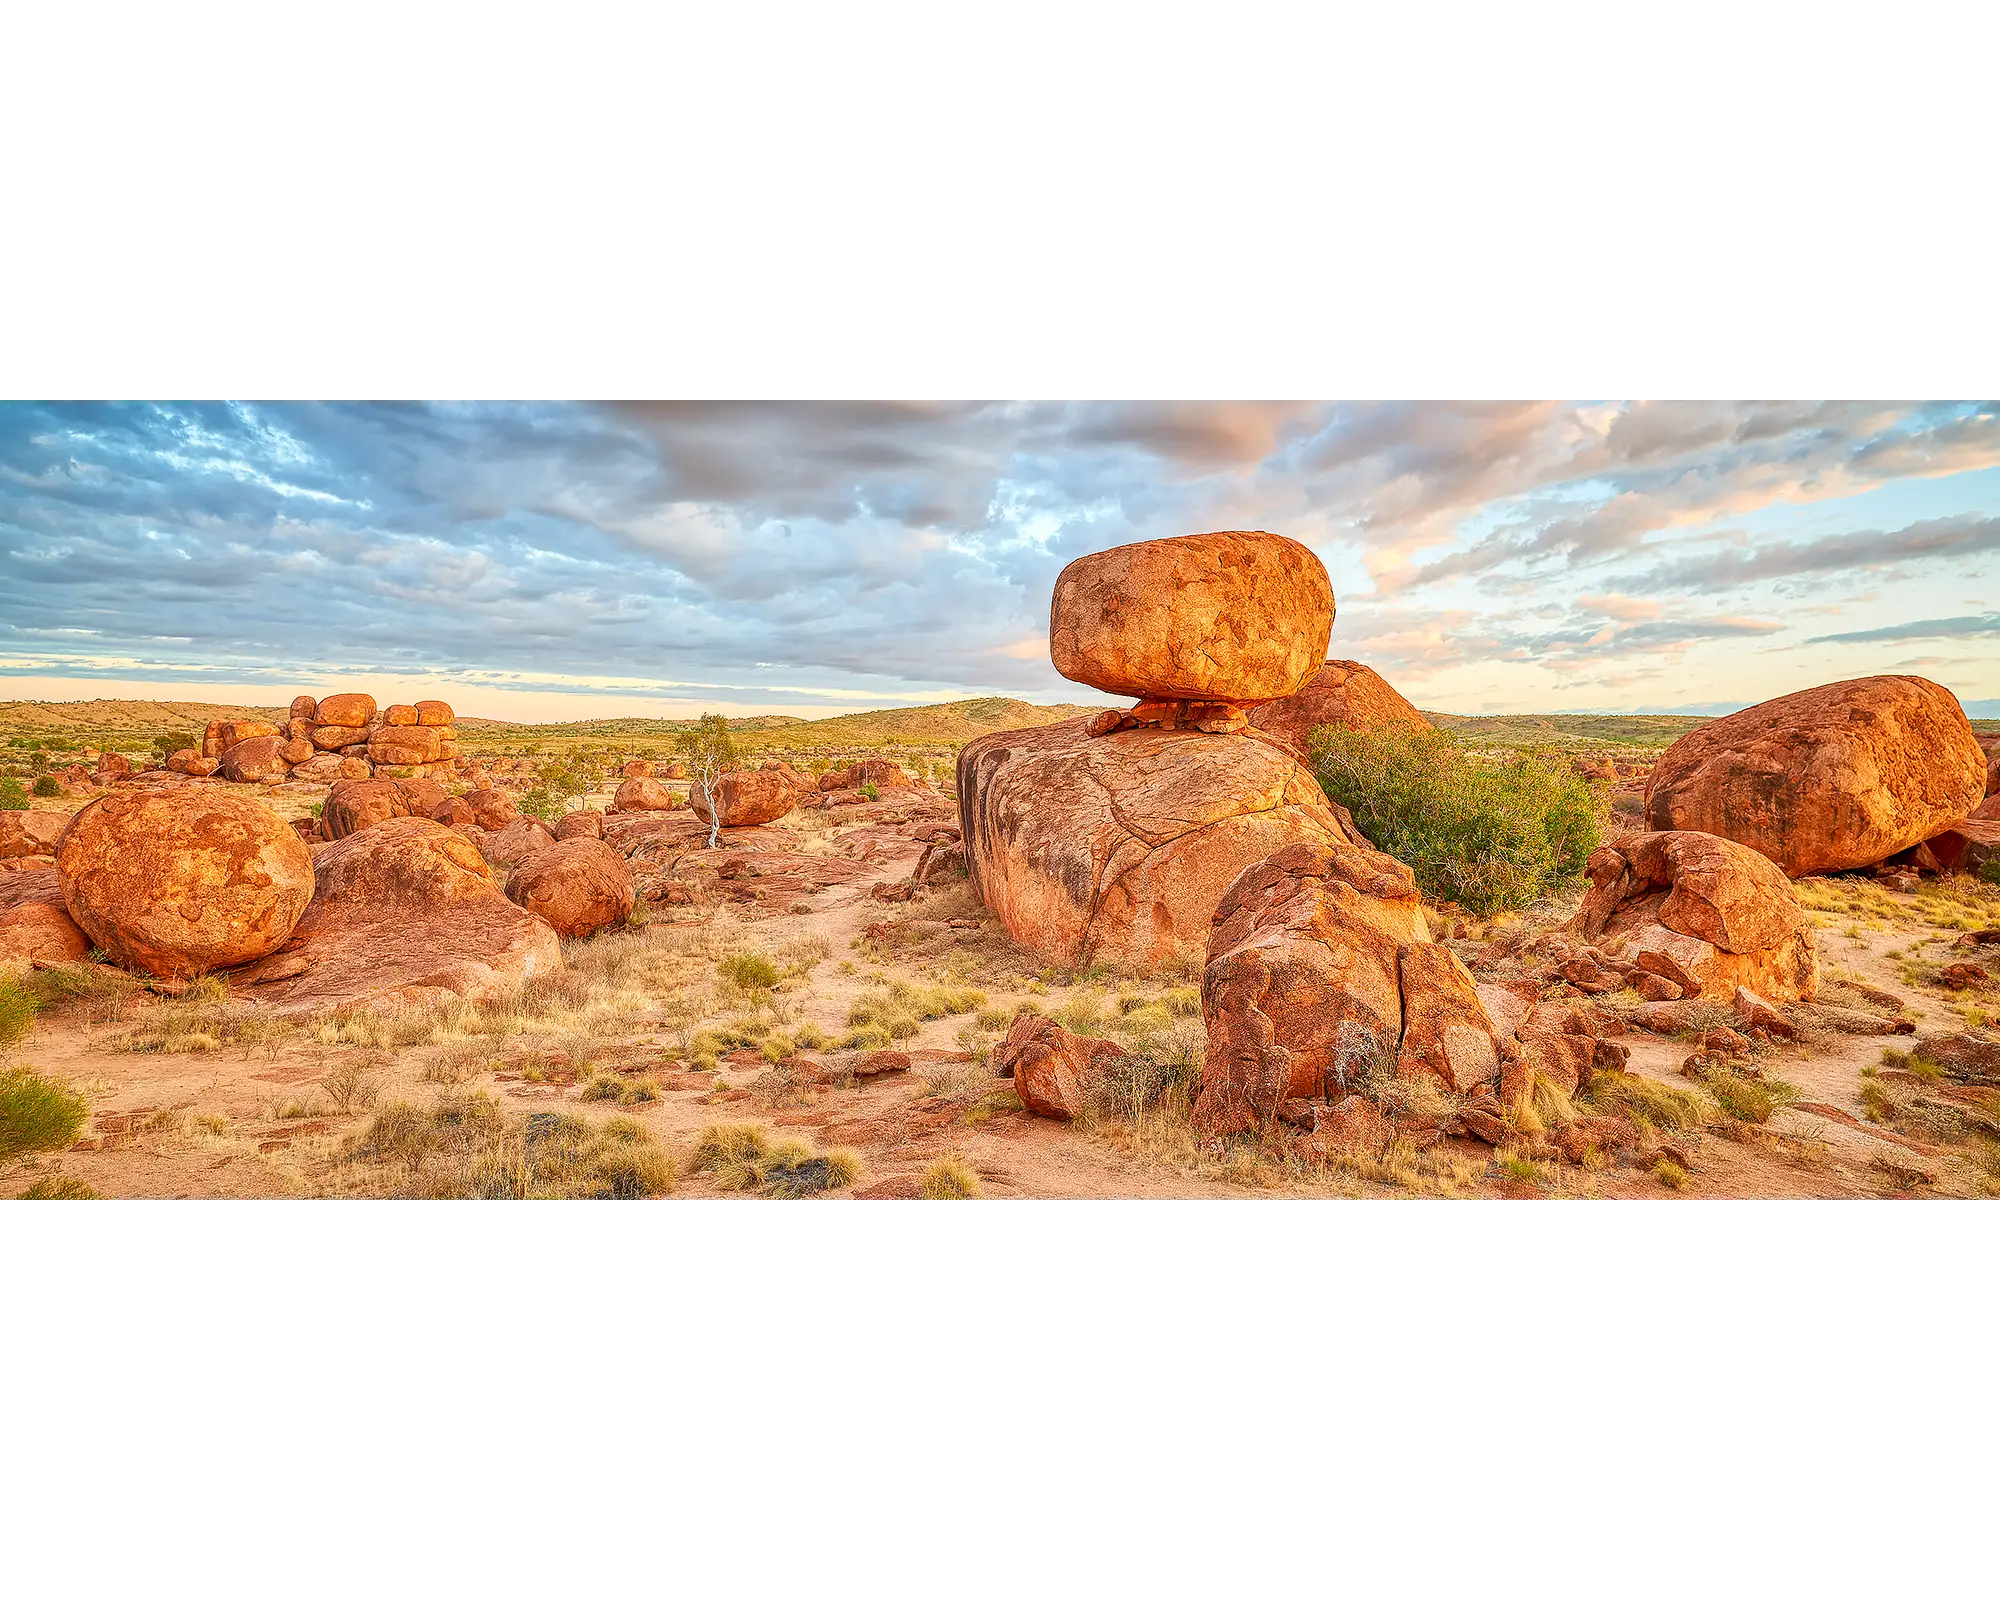 Balanced - Rock Devils Marbles, Northern Territory, Australia.